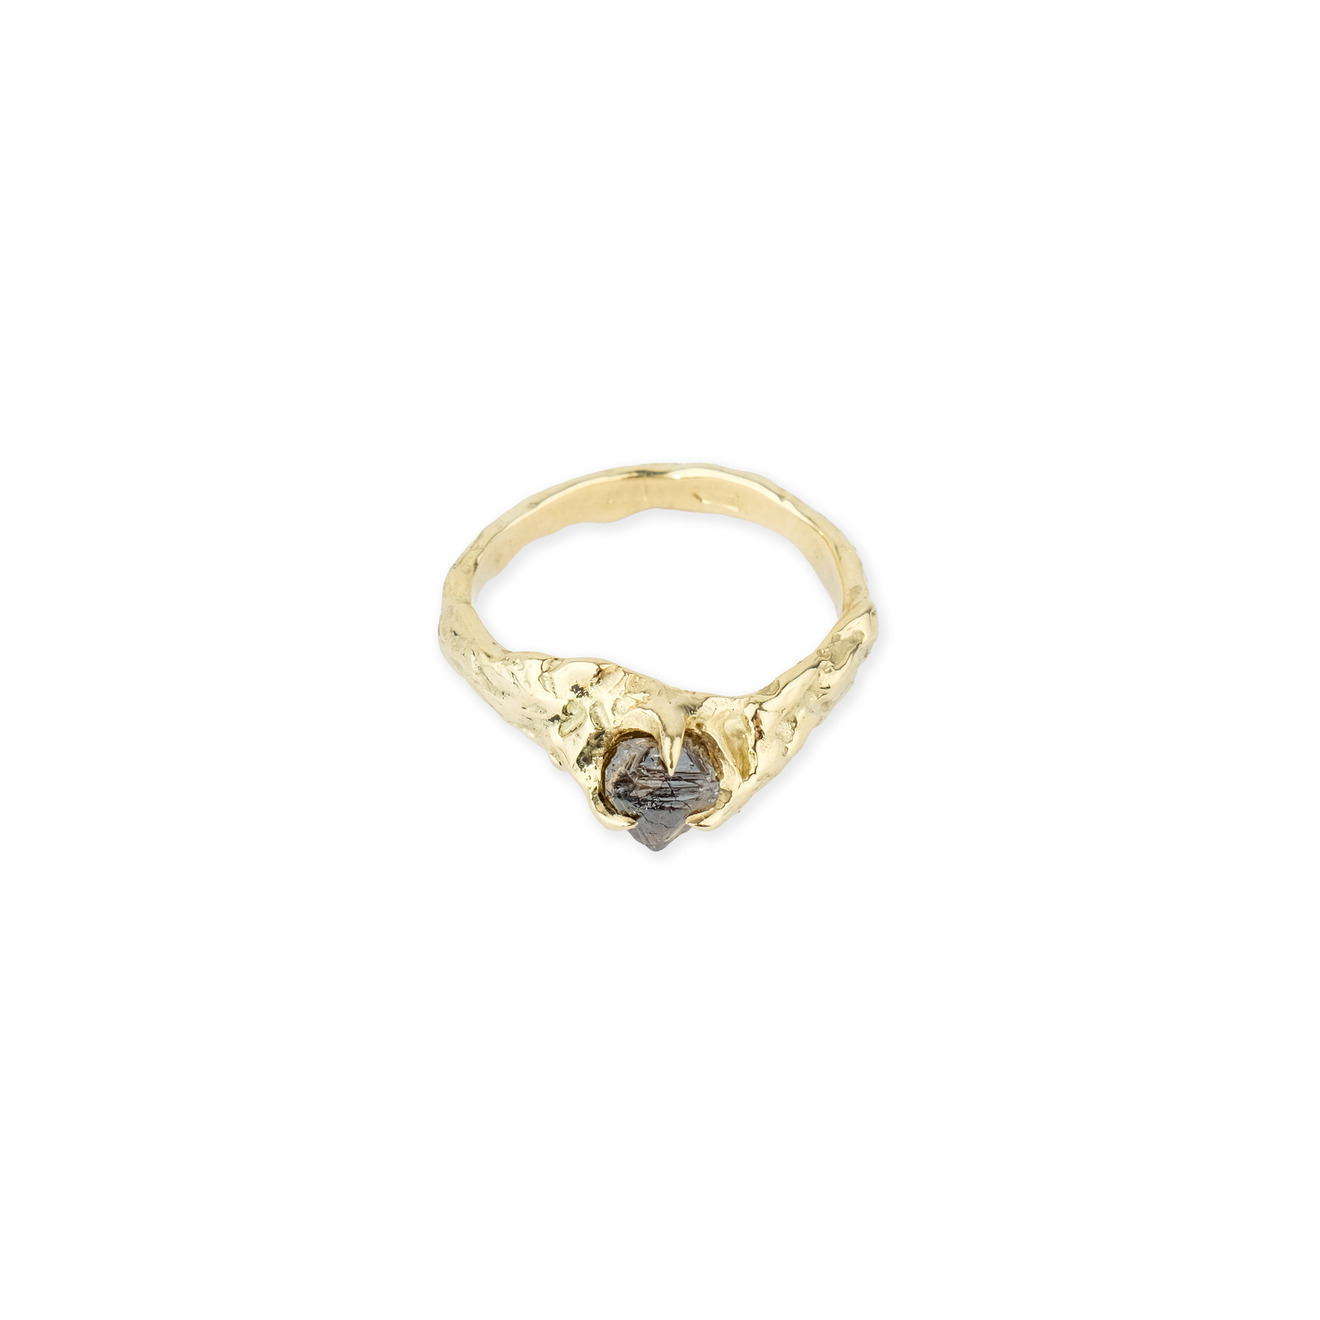 kintsugi jewelry кольцо rough diamond из золота с кристаллом кварца Kintsugi Jewelry Кольцо Trust из золота с кристаллом кварца